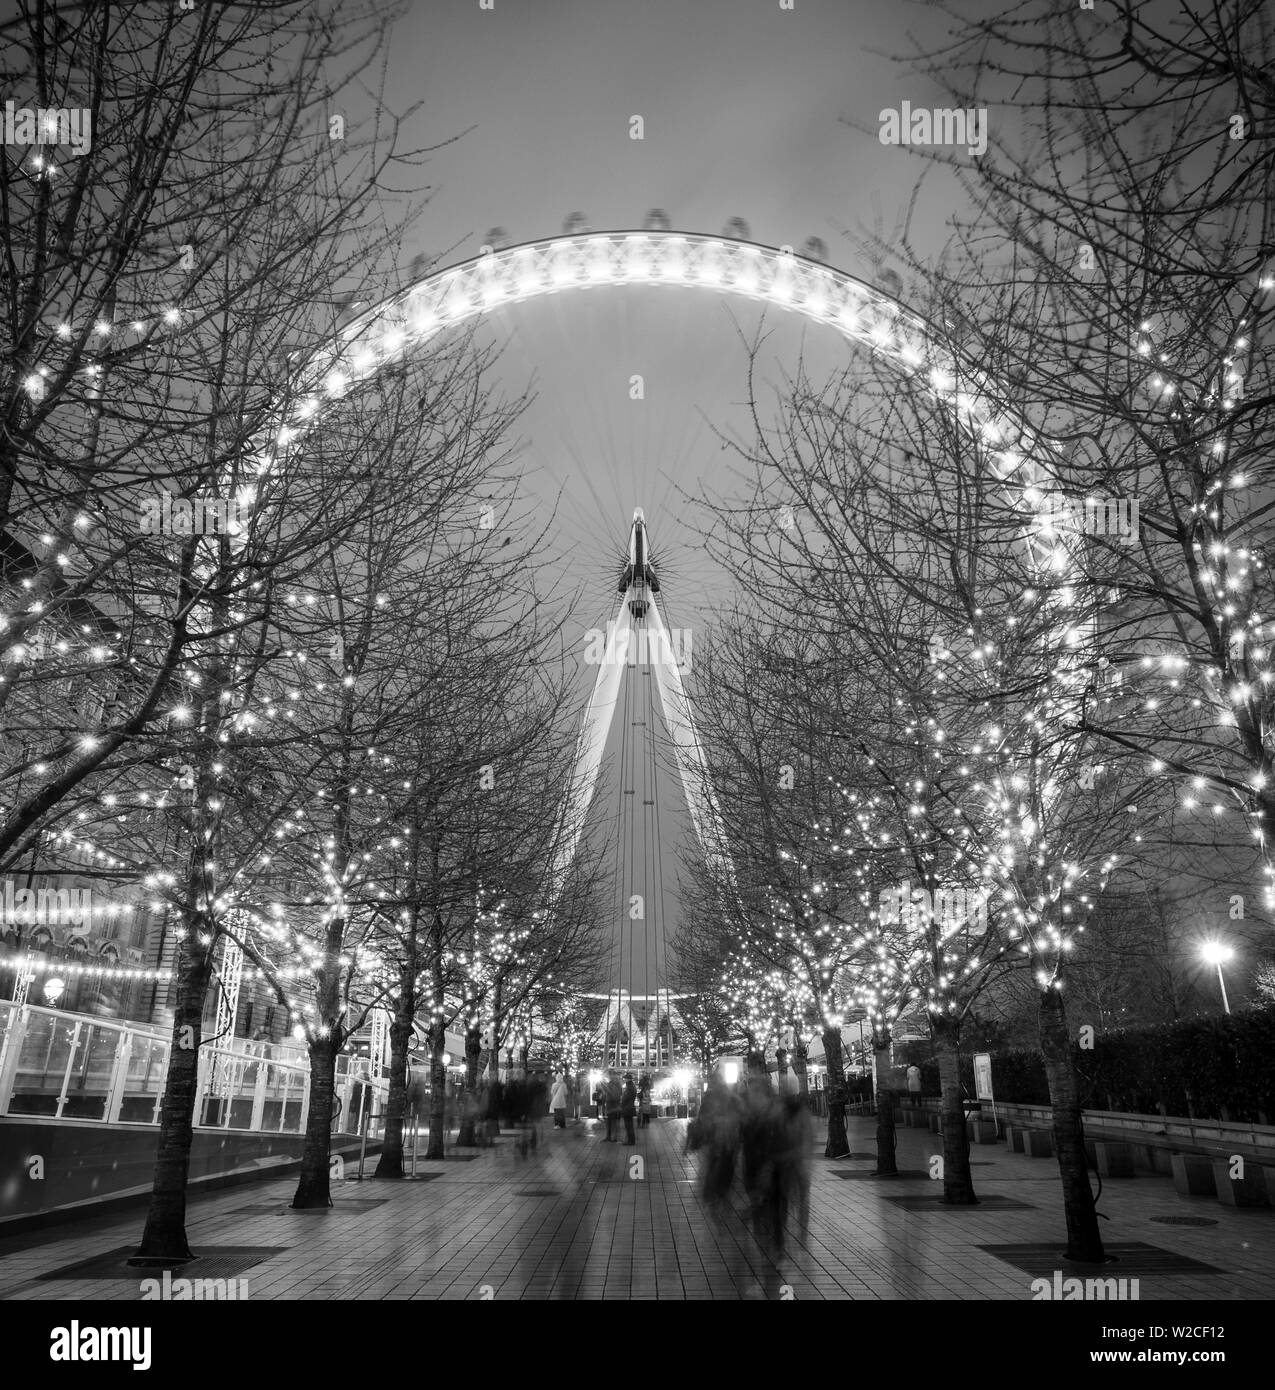 London Eye (Millennium Wheel), South Bank, London, England Stock Photo